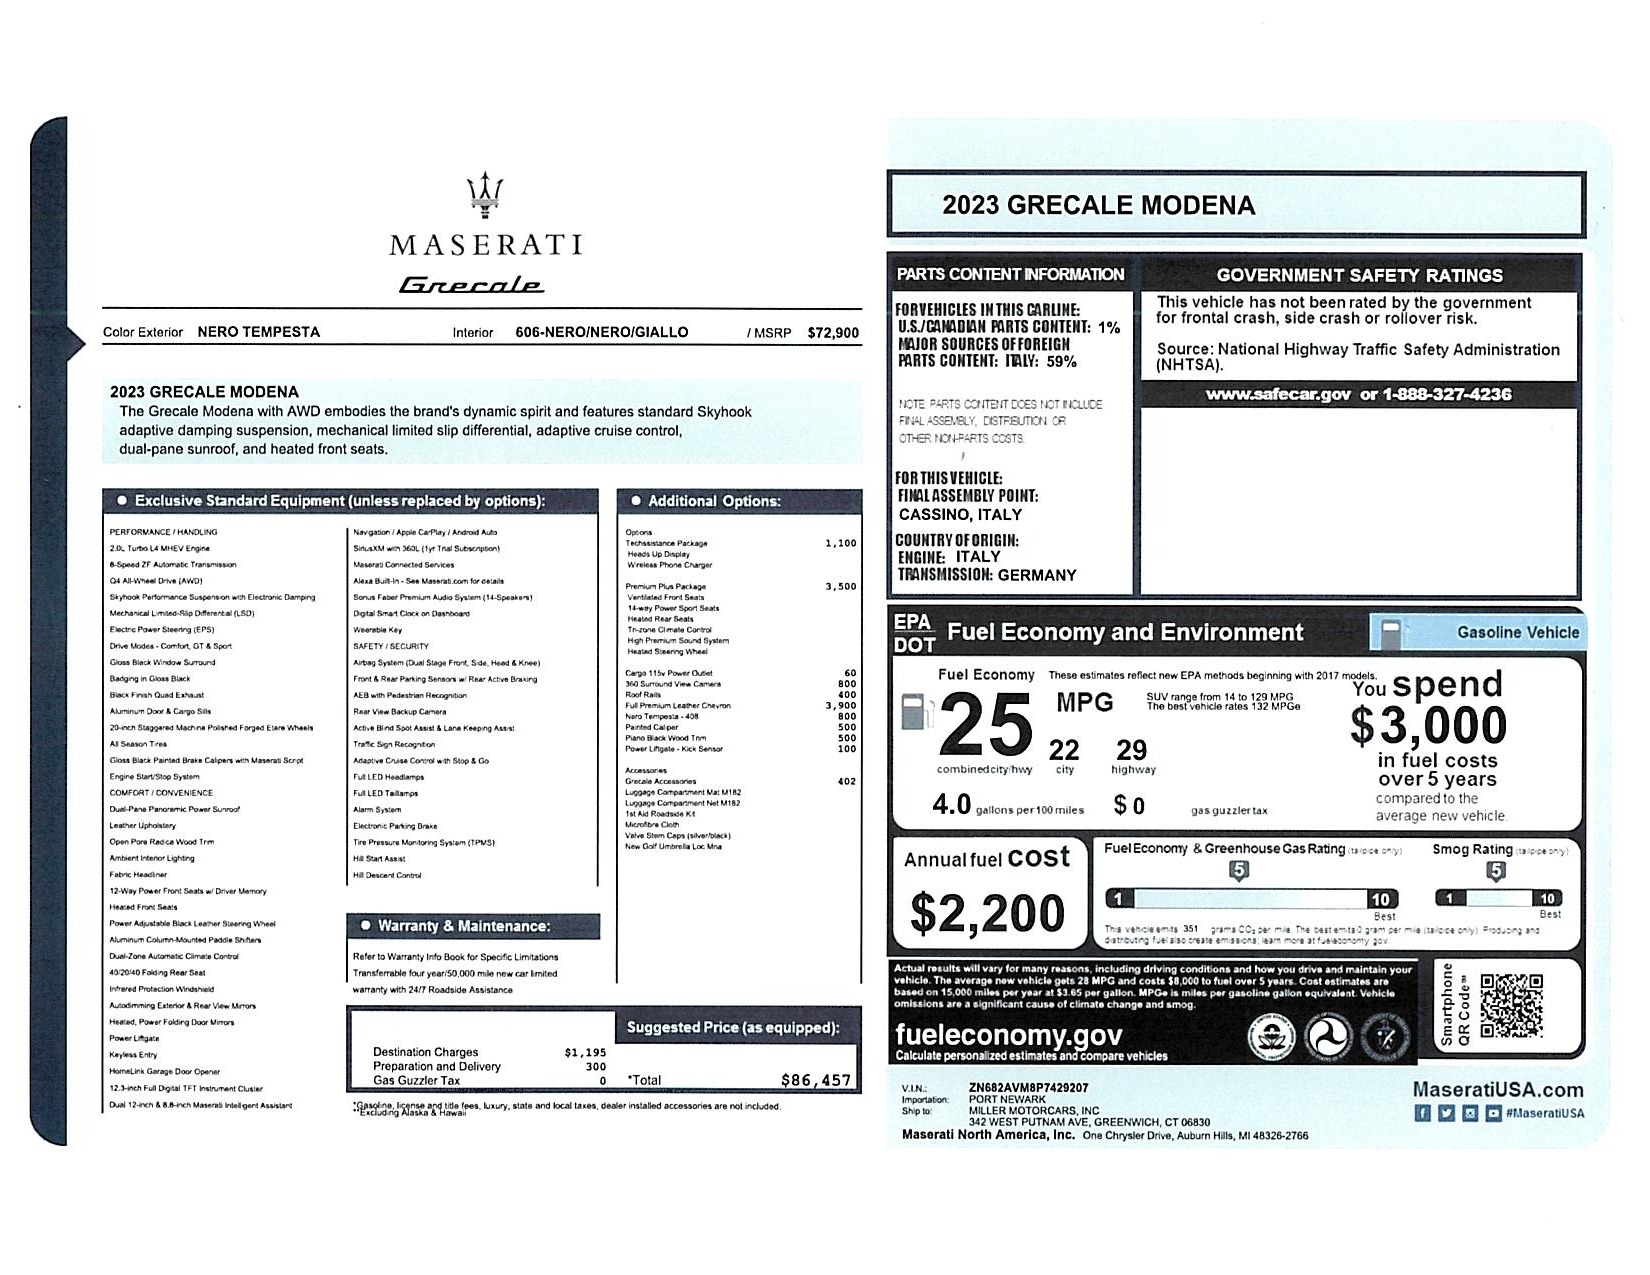 New-2023-Maserati-Grecale-Modena